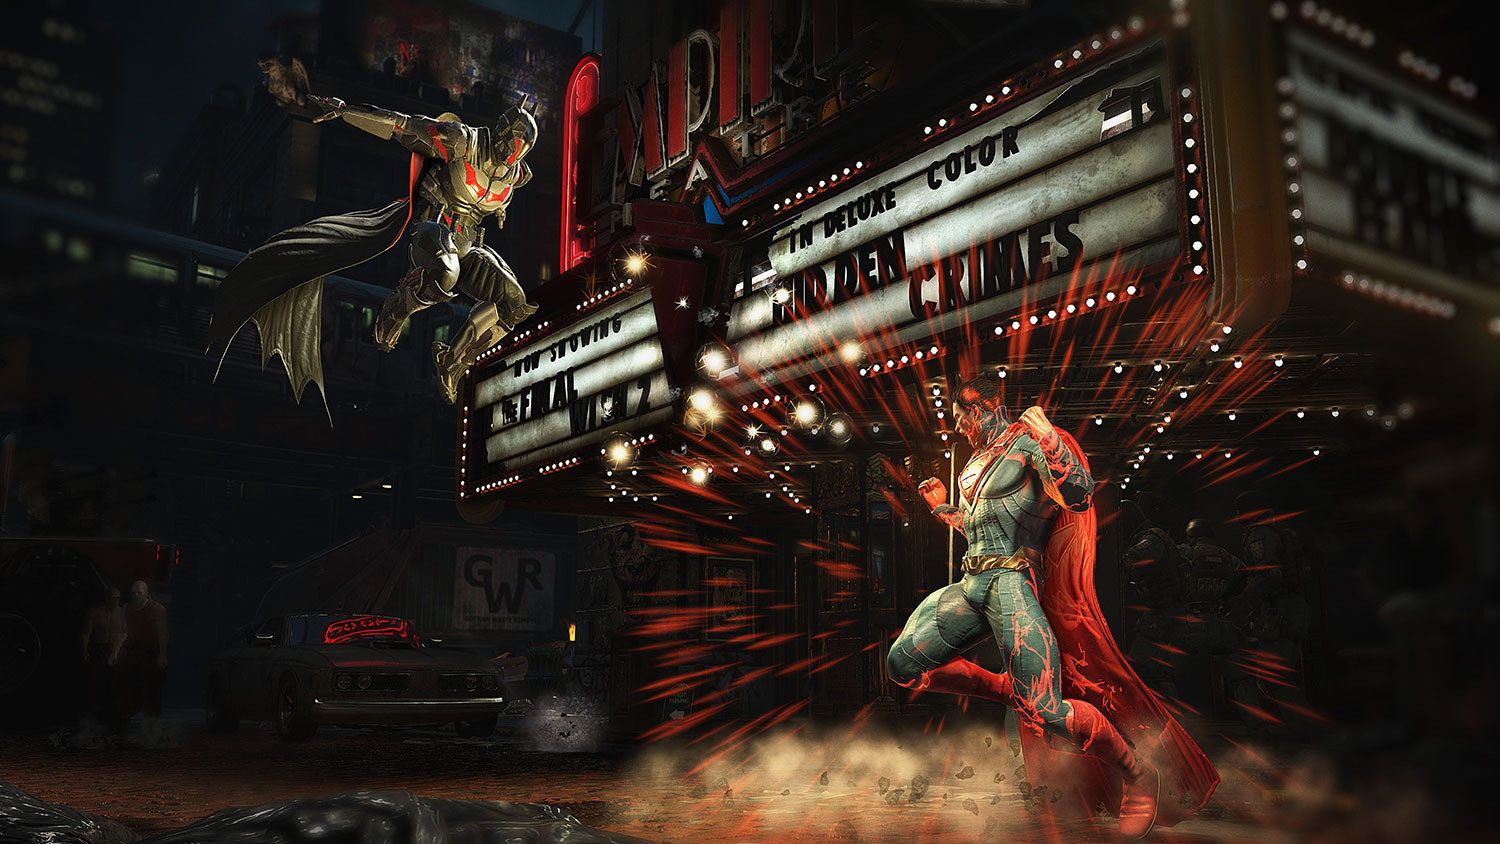 injustice 2 hands on batman superman02 1465839354